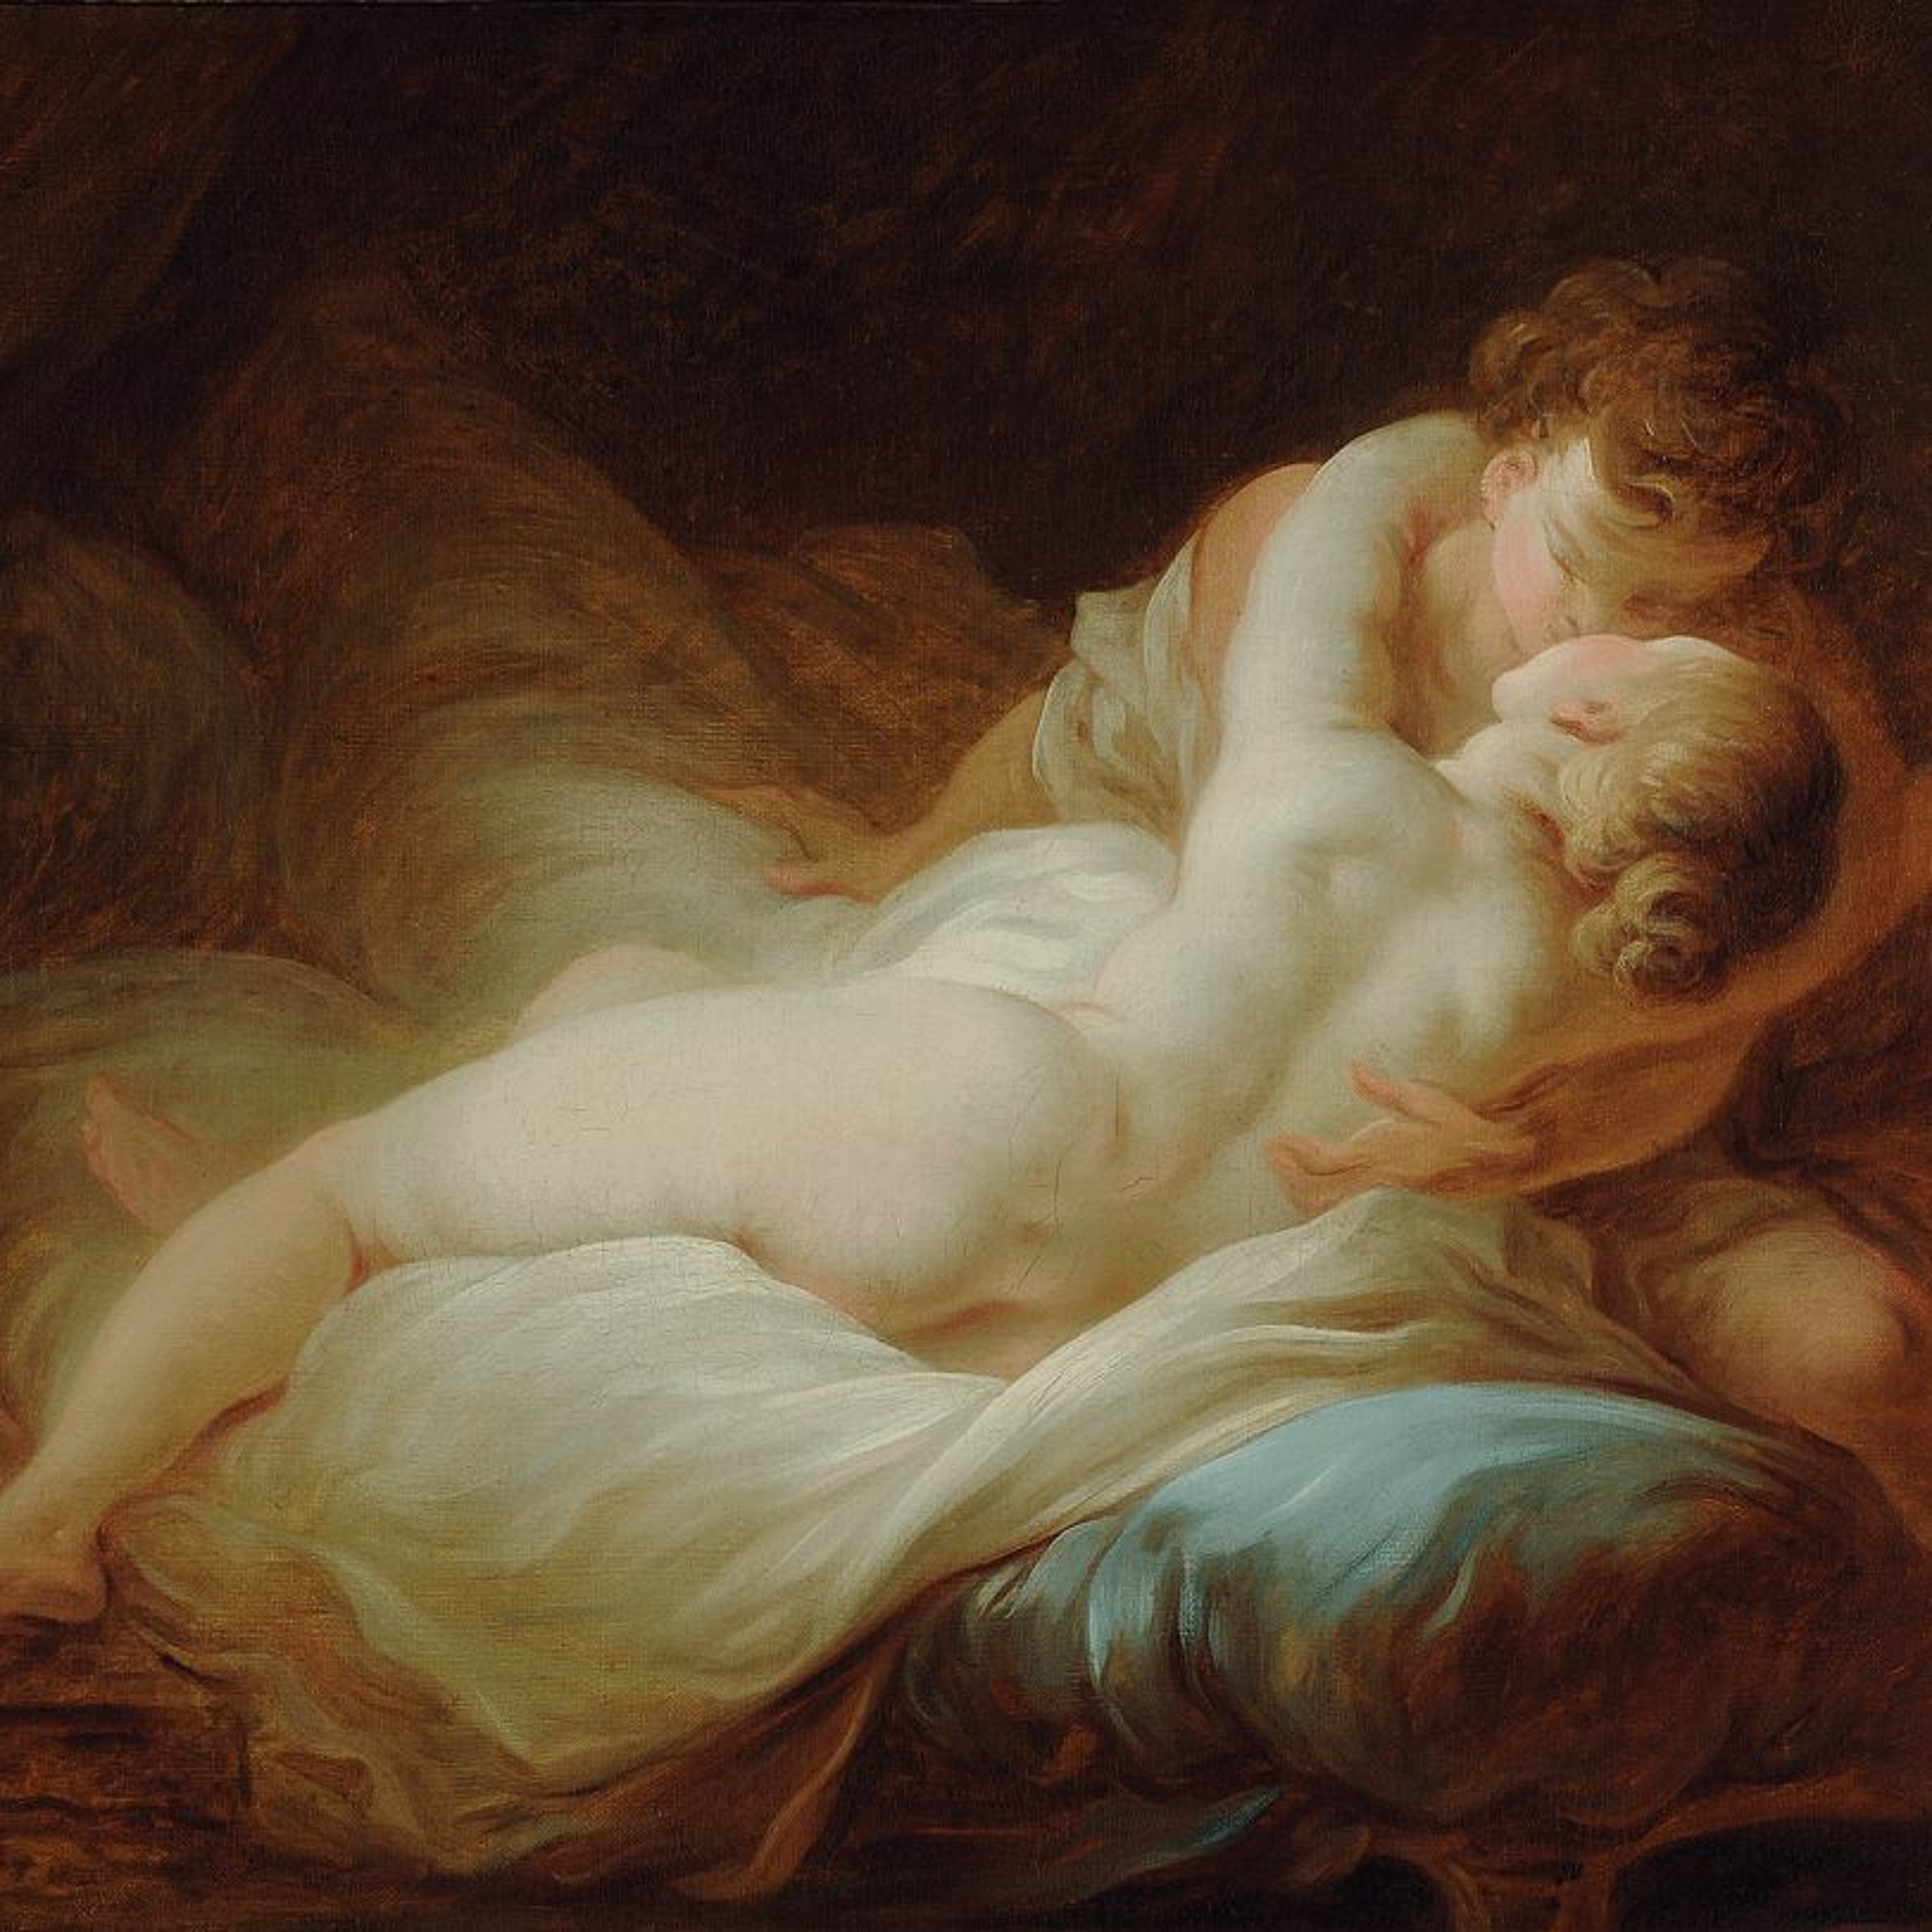 Ep. 33 - Jean-Honoré Fragonard's "The Desired Moment" (c. 1770)